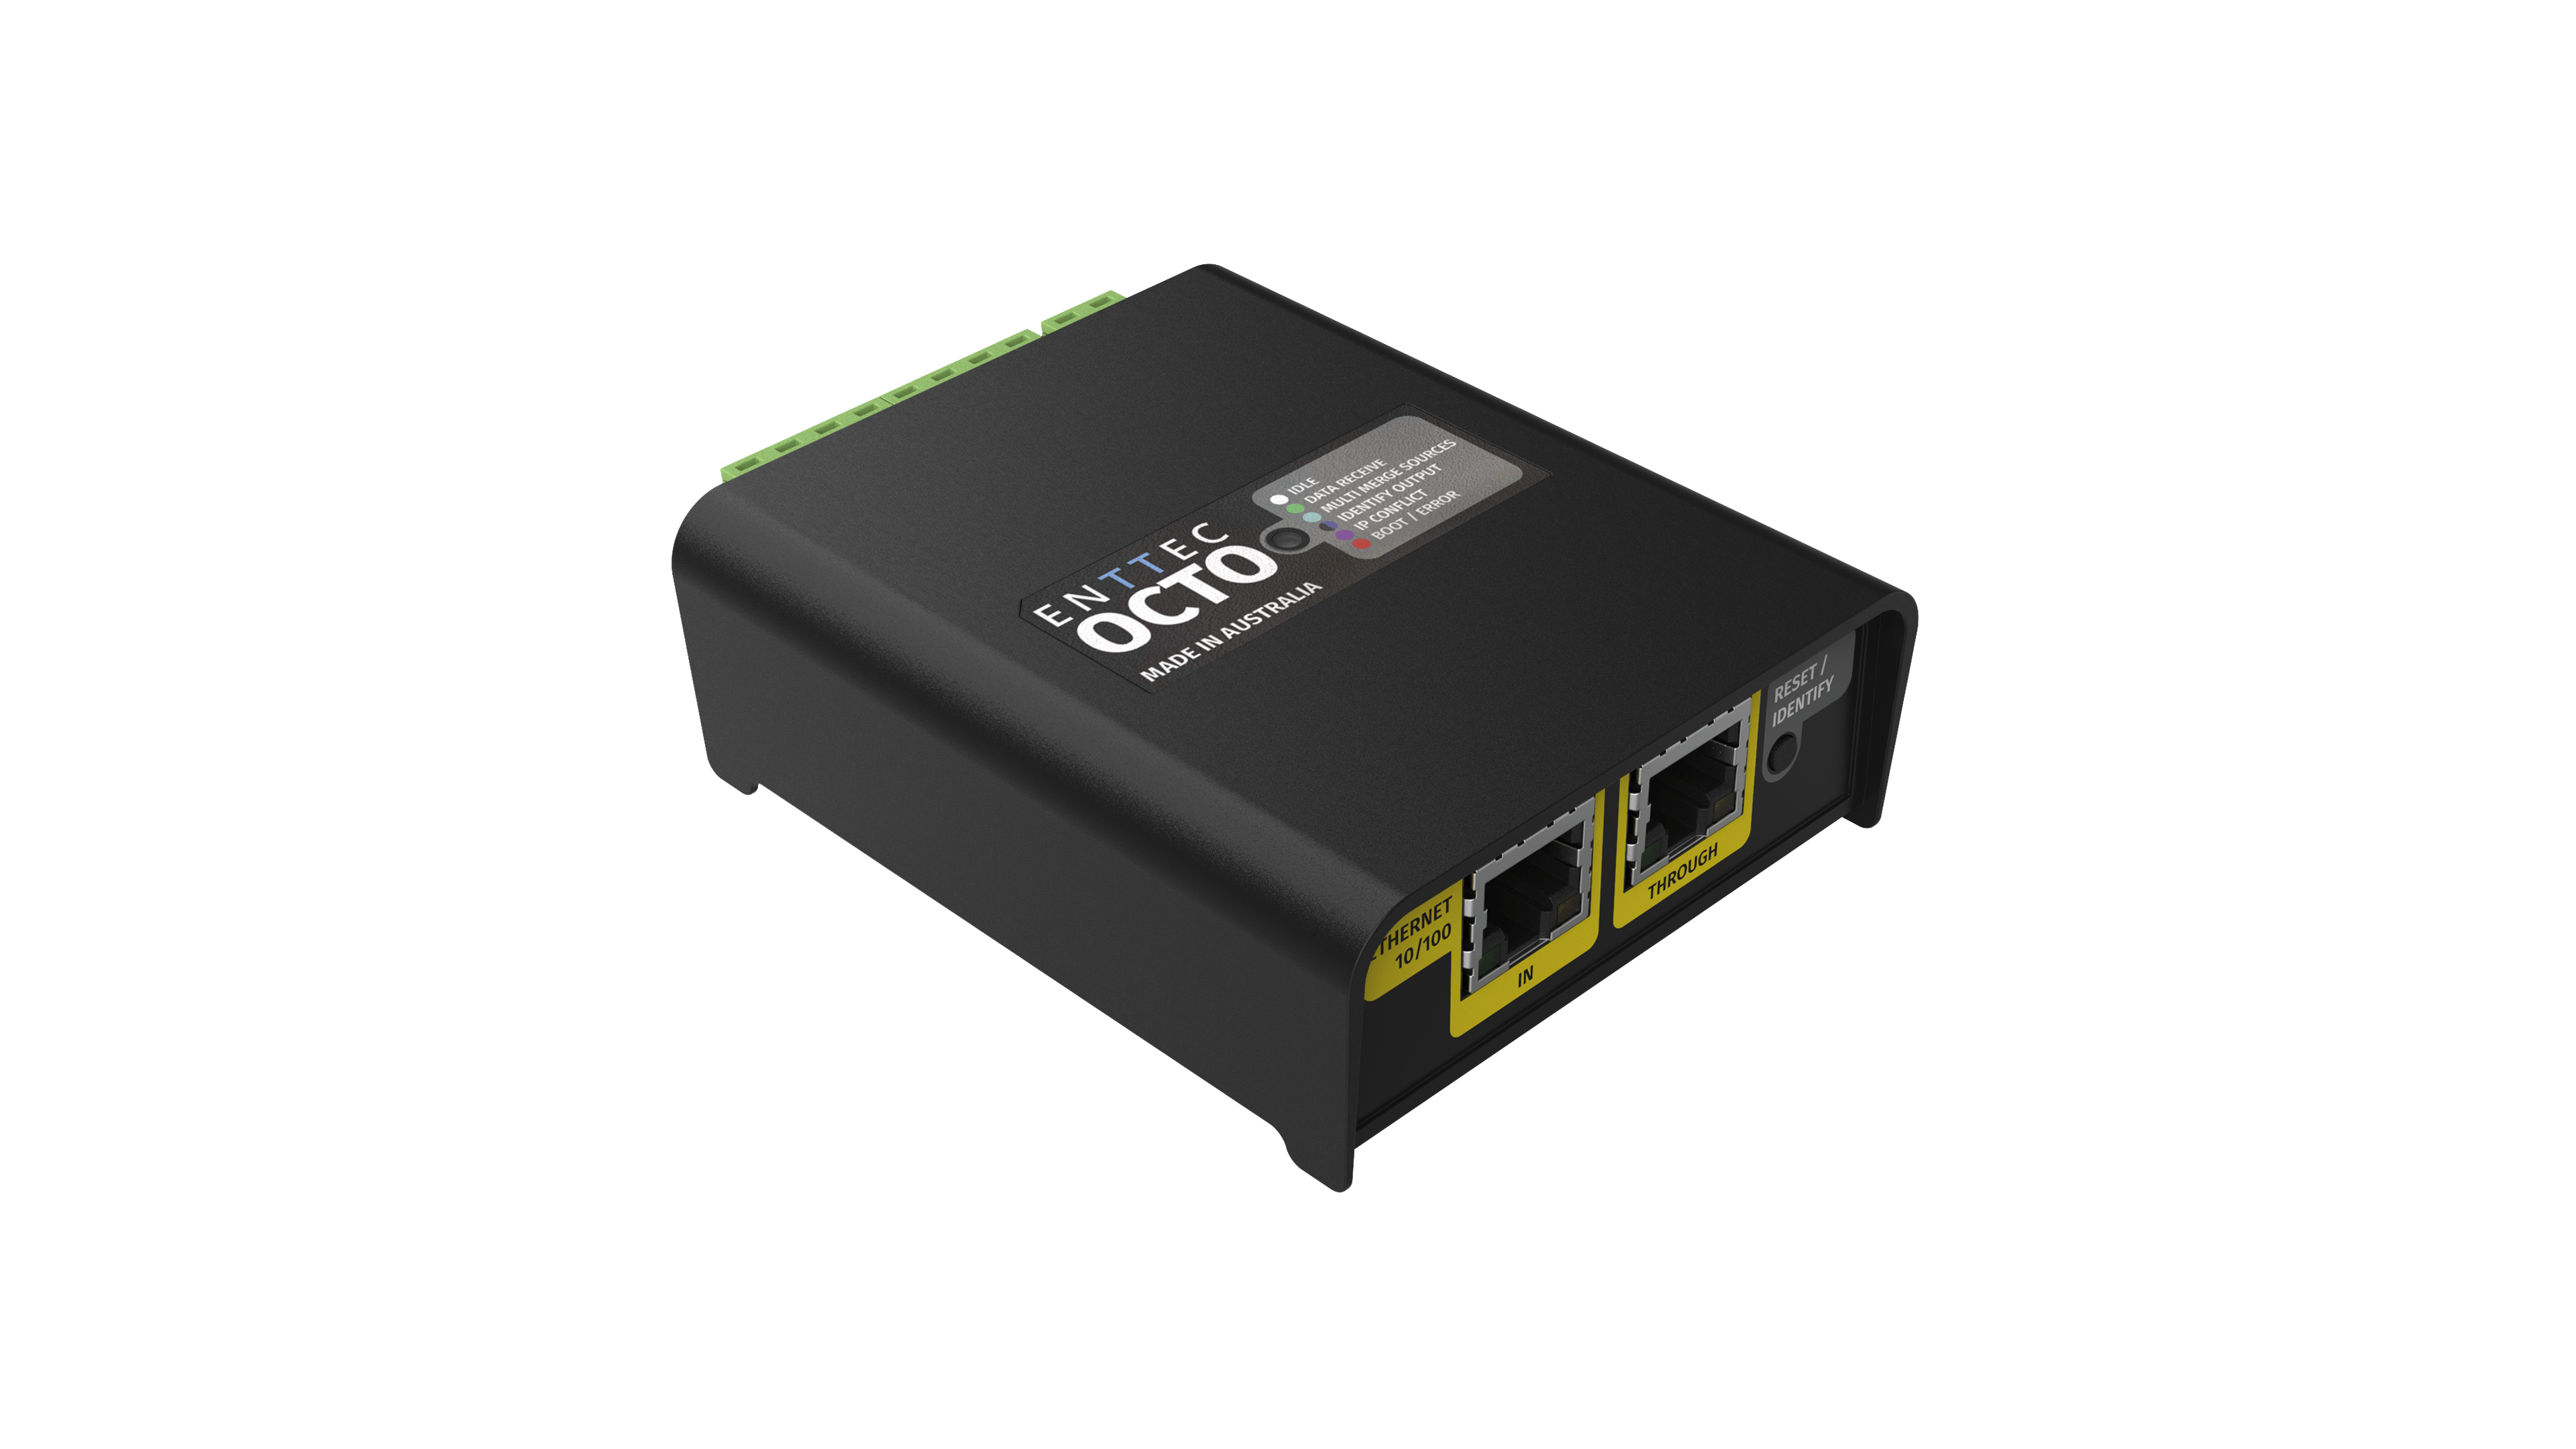 OCTO Mk2 – LED pixel controller